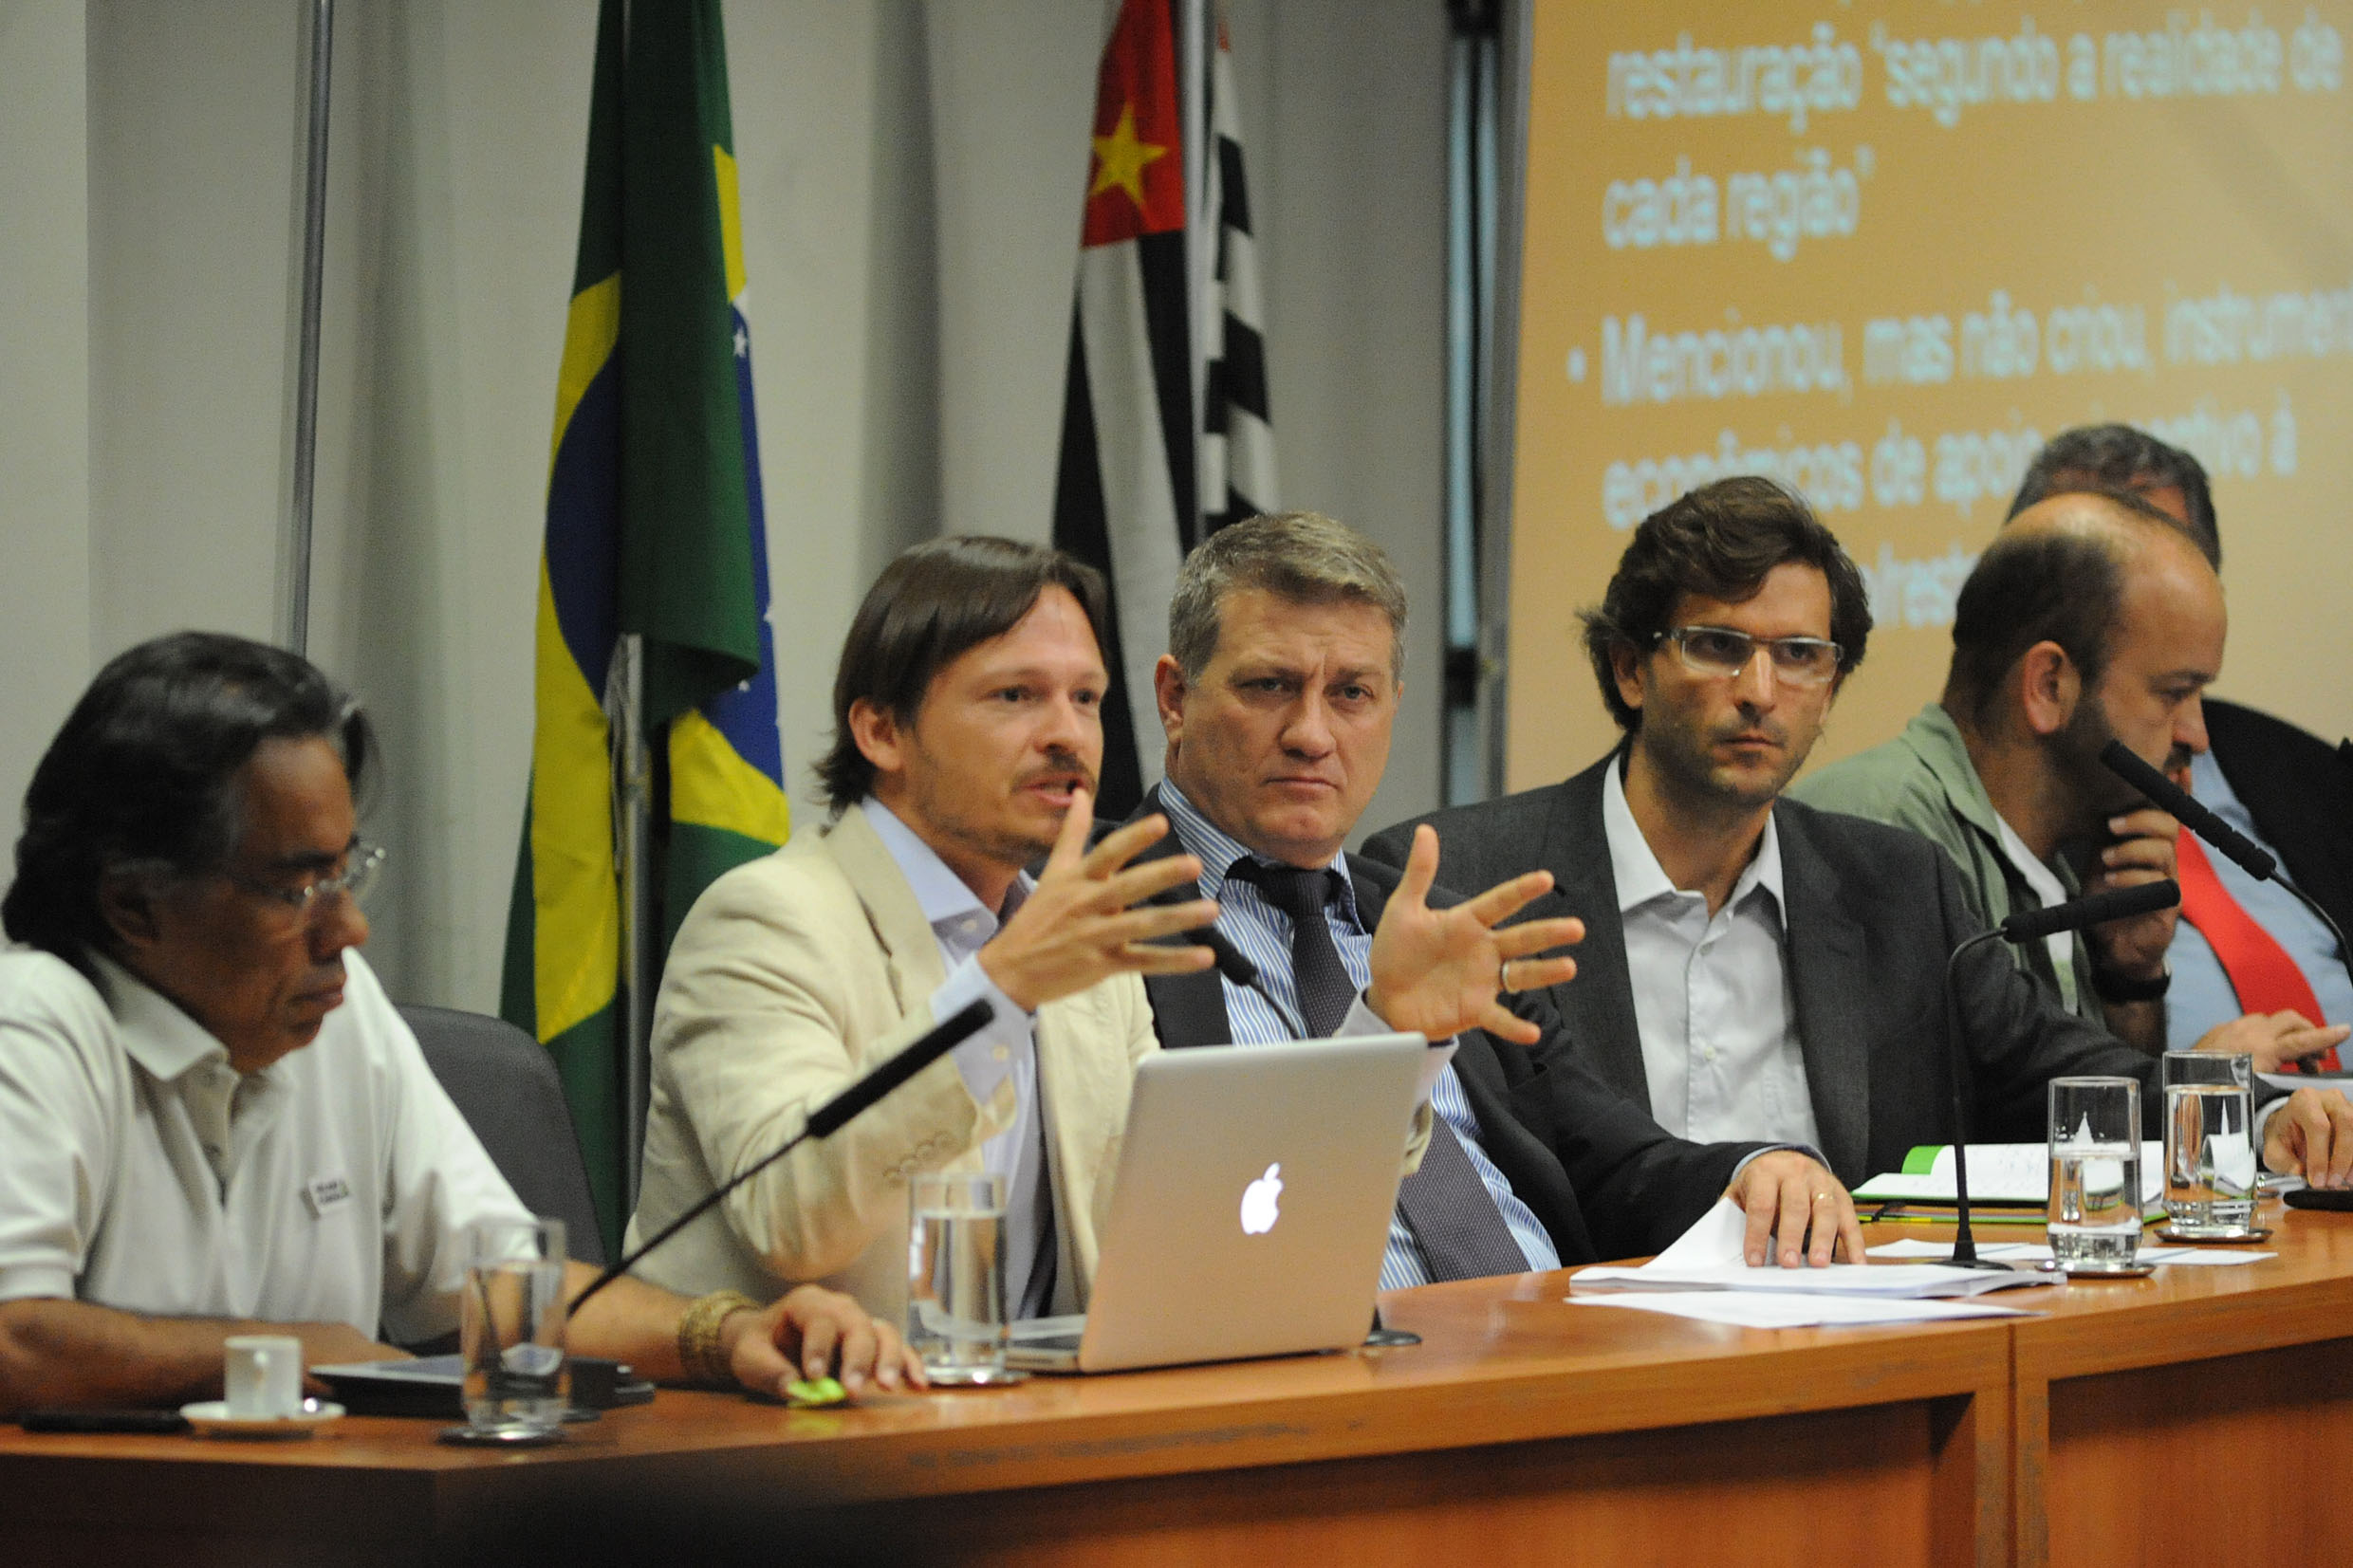 Advogado e ambientalista Raul do Vale, ao microfone <a style='float:right;color:#ccc' href='https://www3.al.sp.gov.br/repositorio/noticia/N-05-2014/fg161595.jpg' target=_blank><i class='bi bi-zoom-in'></i> Clique para ver a imagem </a>